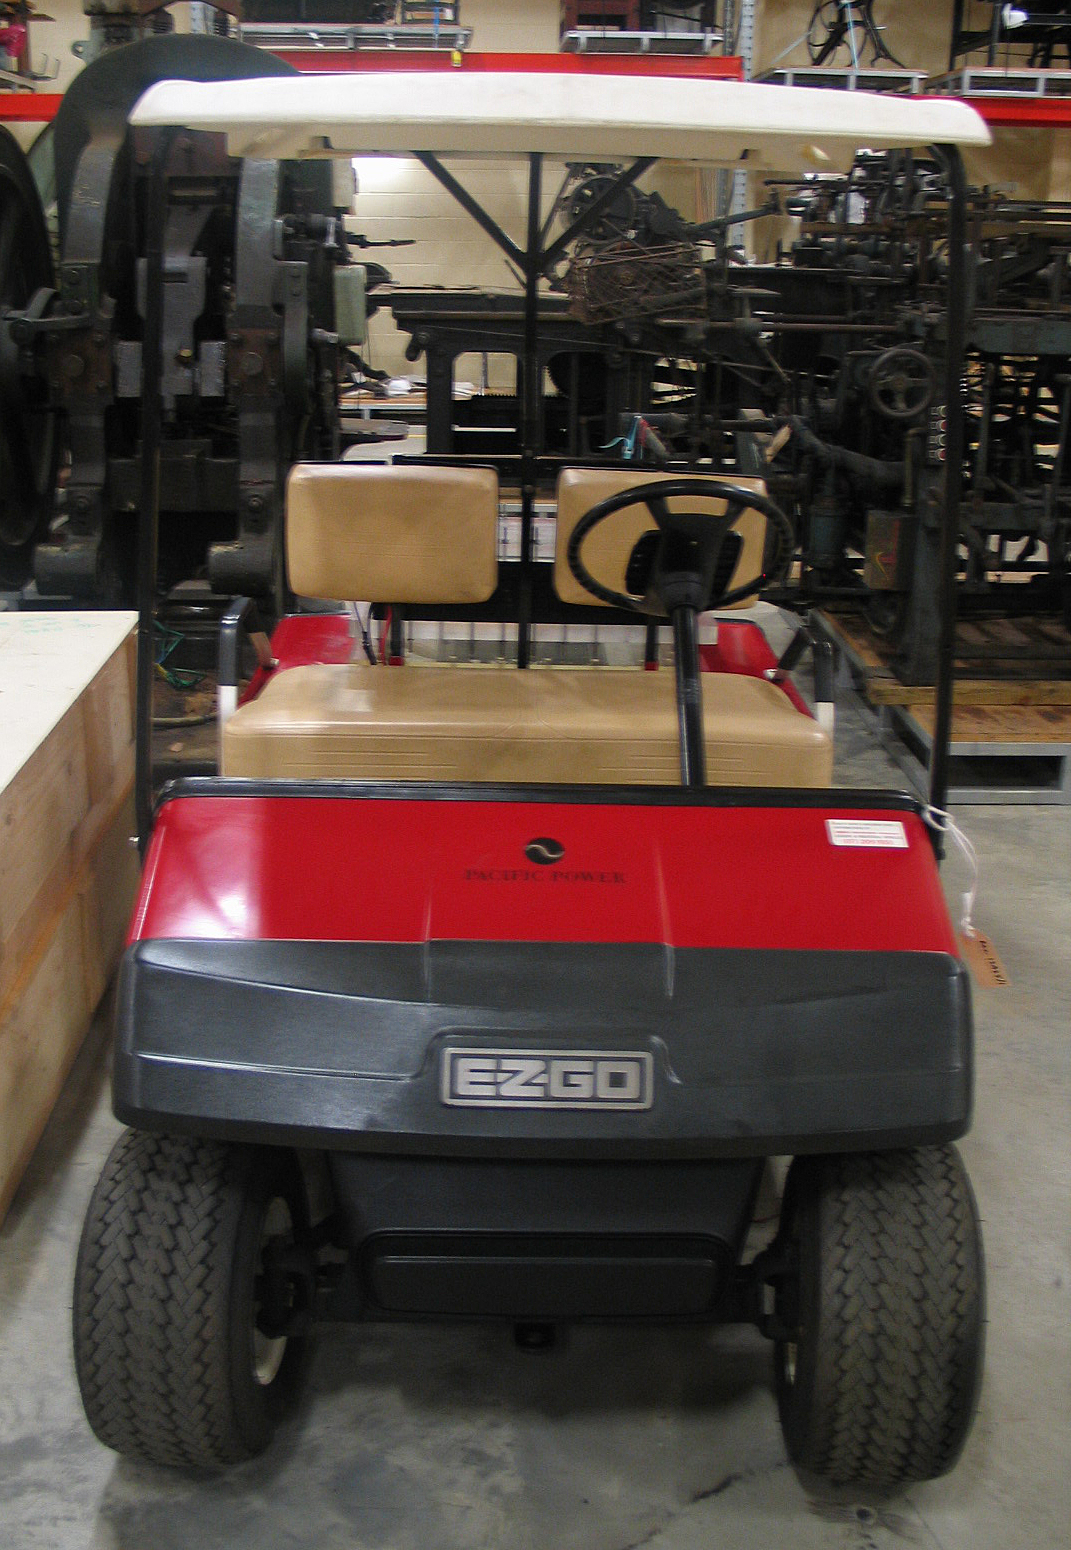 Electric golf cart used in vanadium battery trials